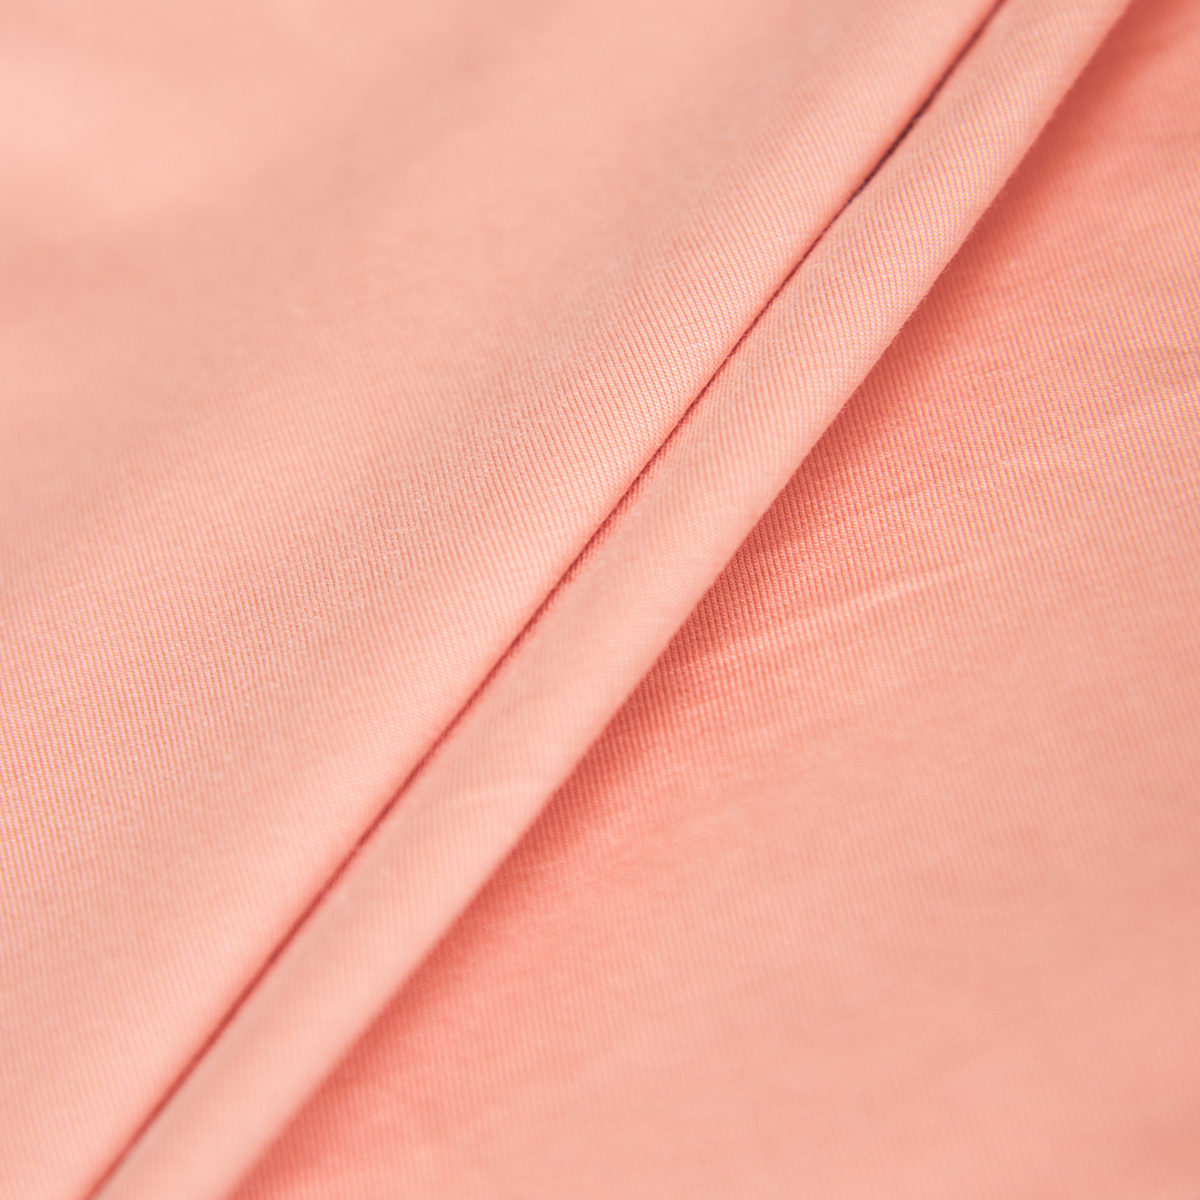 Đầm ngủ nữ cotton iBasic SW008